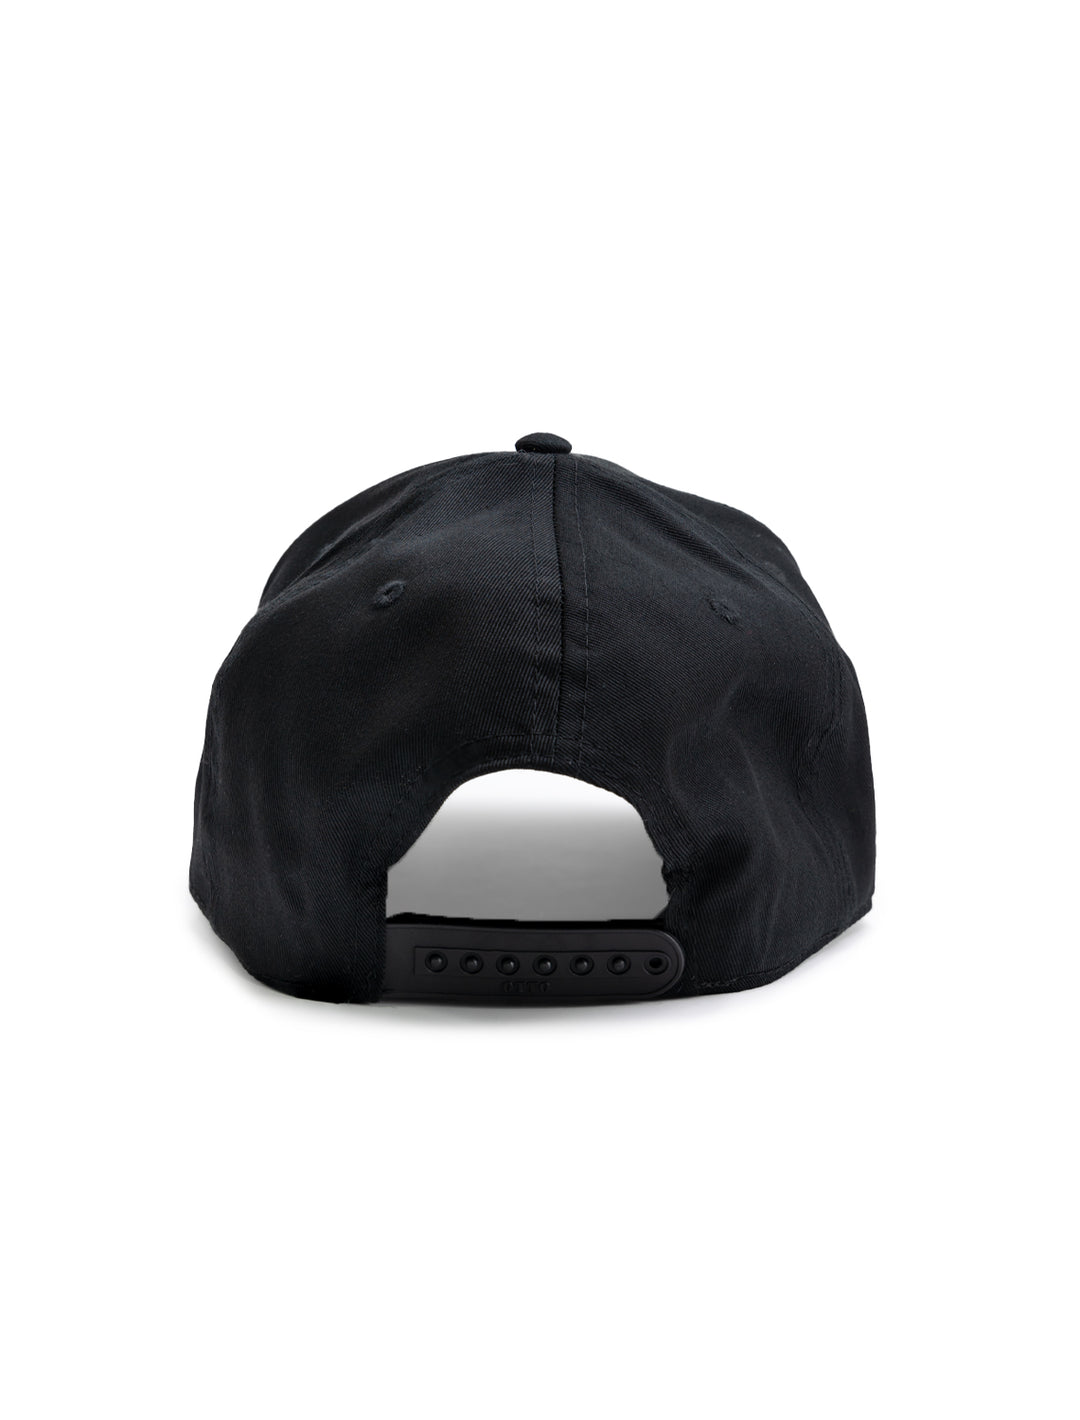 Back view of Recess Apparel's foam front trucker hat in black.